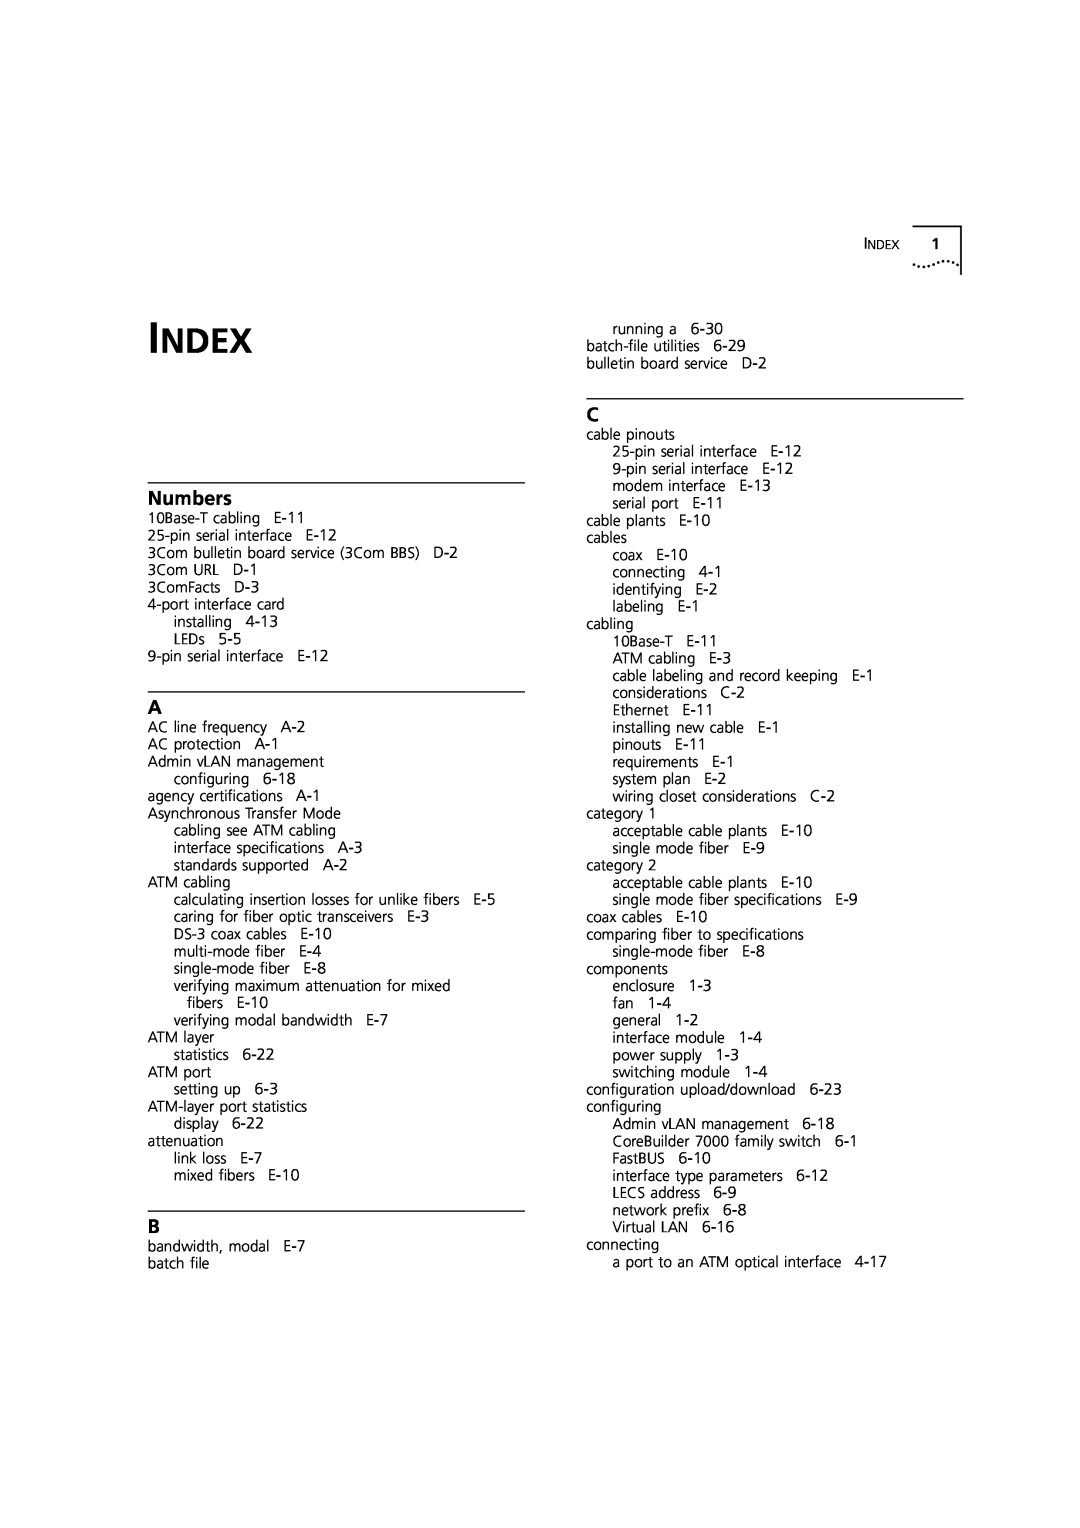 3Com DUA3700-0BAA04 manual Index, Numbers 